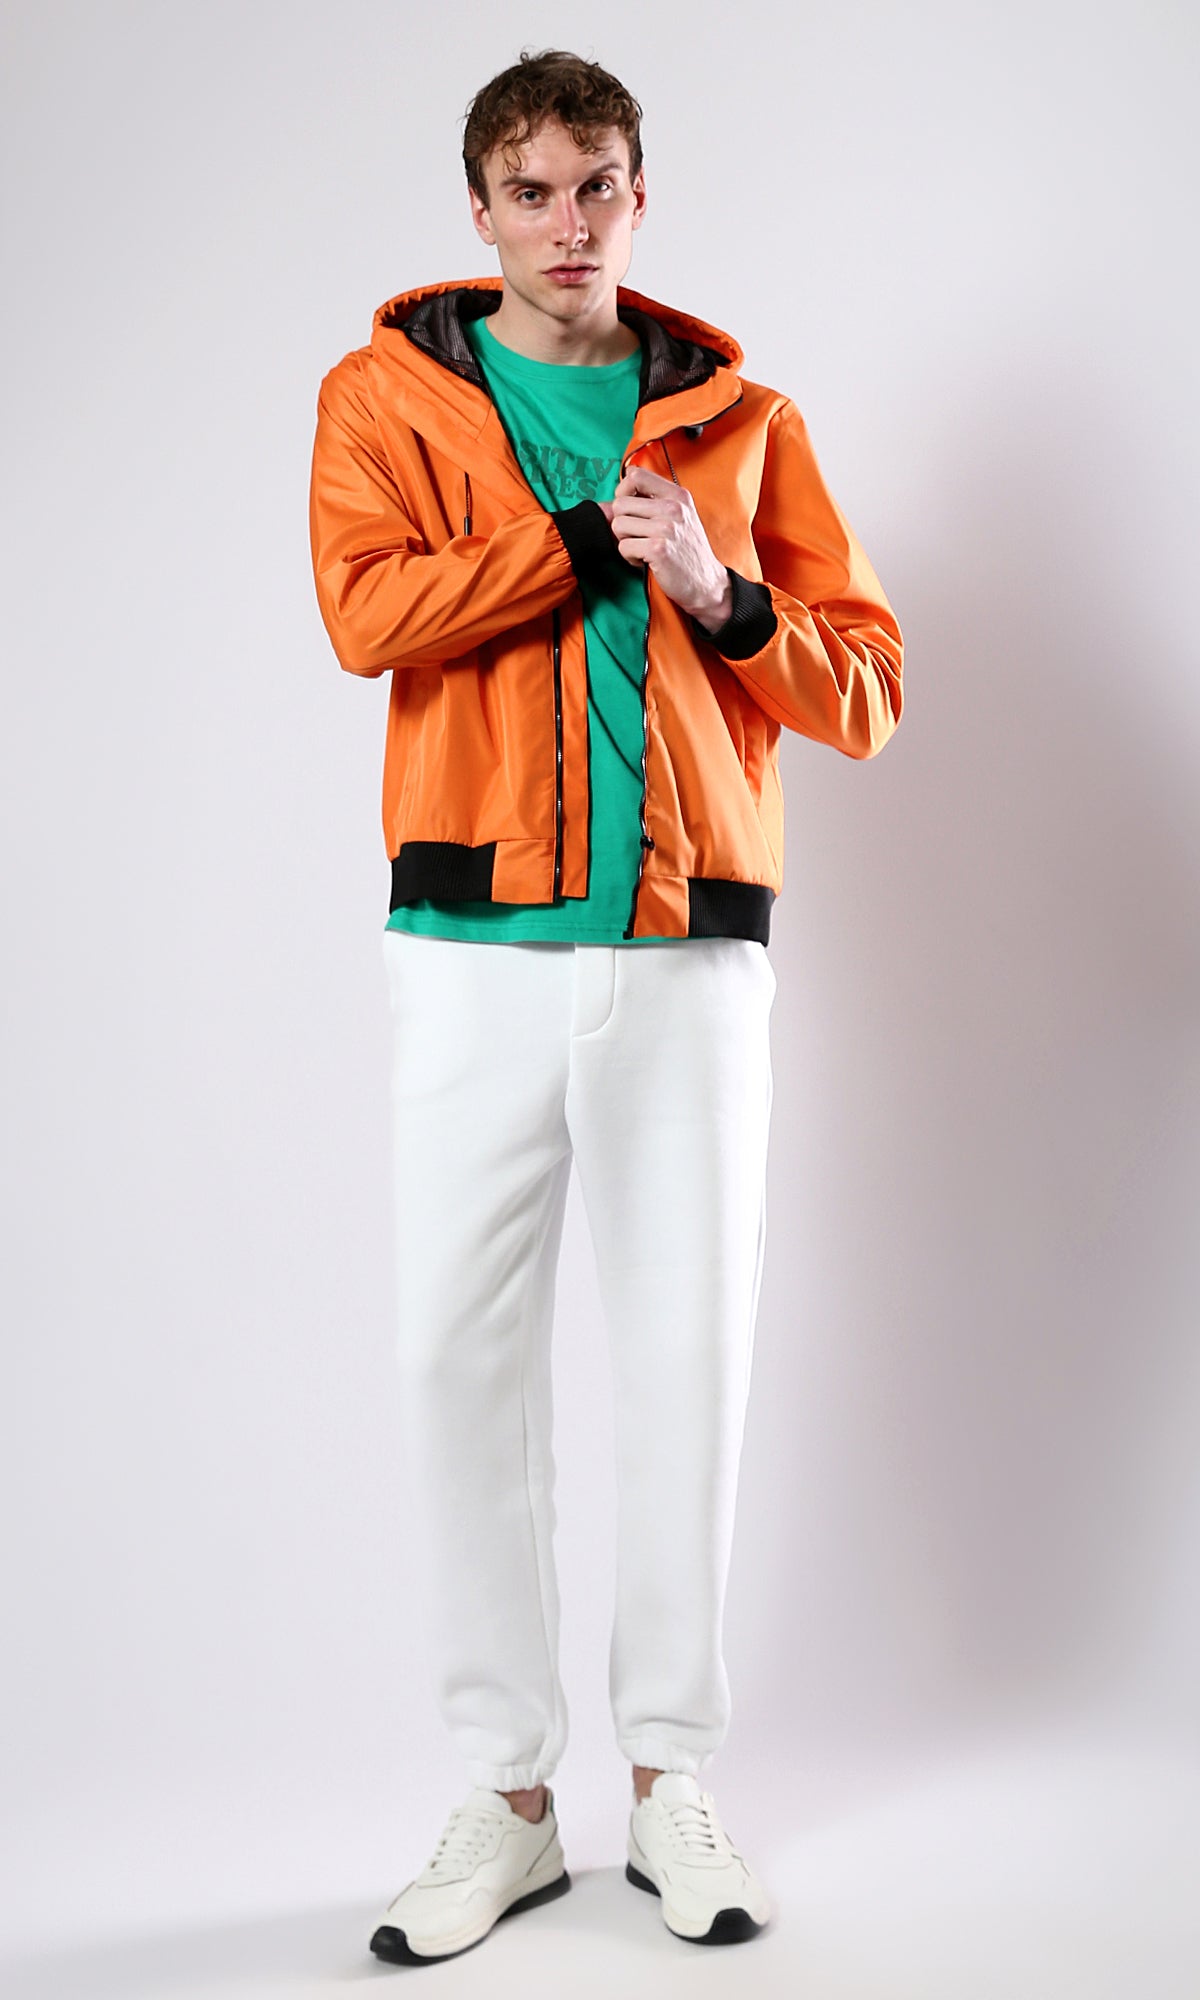 O176268 Solid Orange Jacket With Mesh Hooded Neck